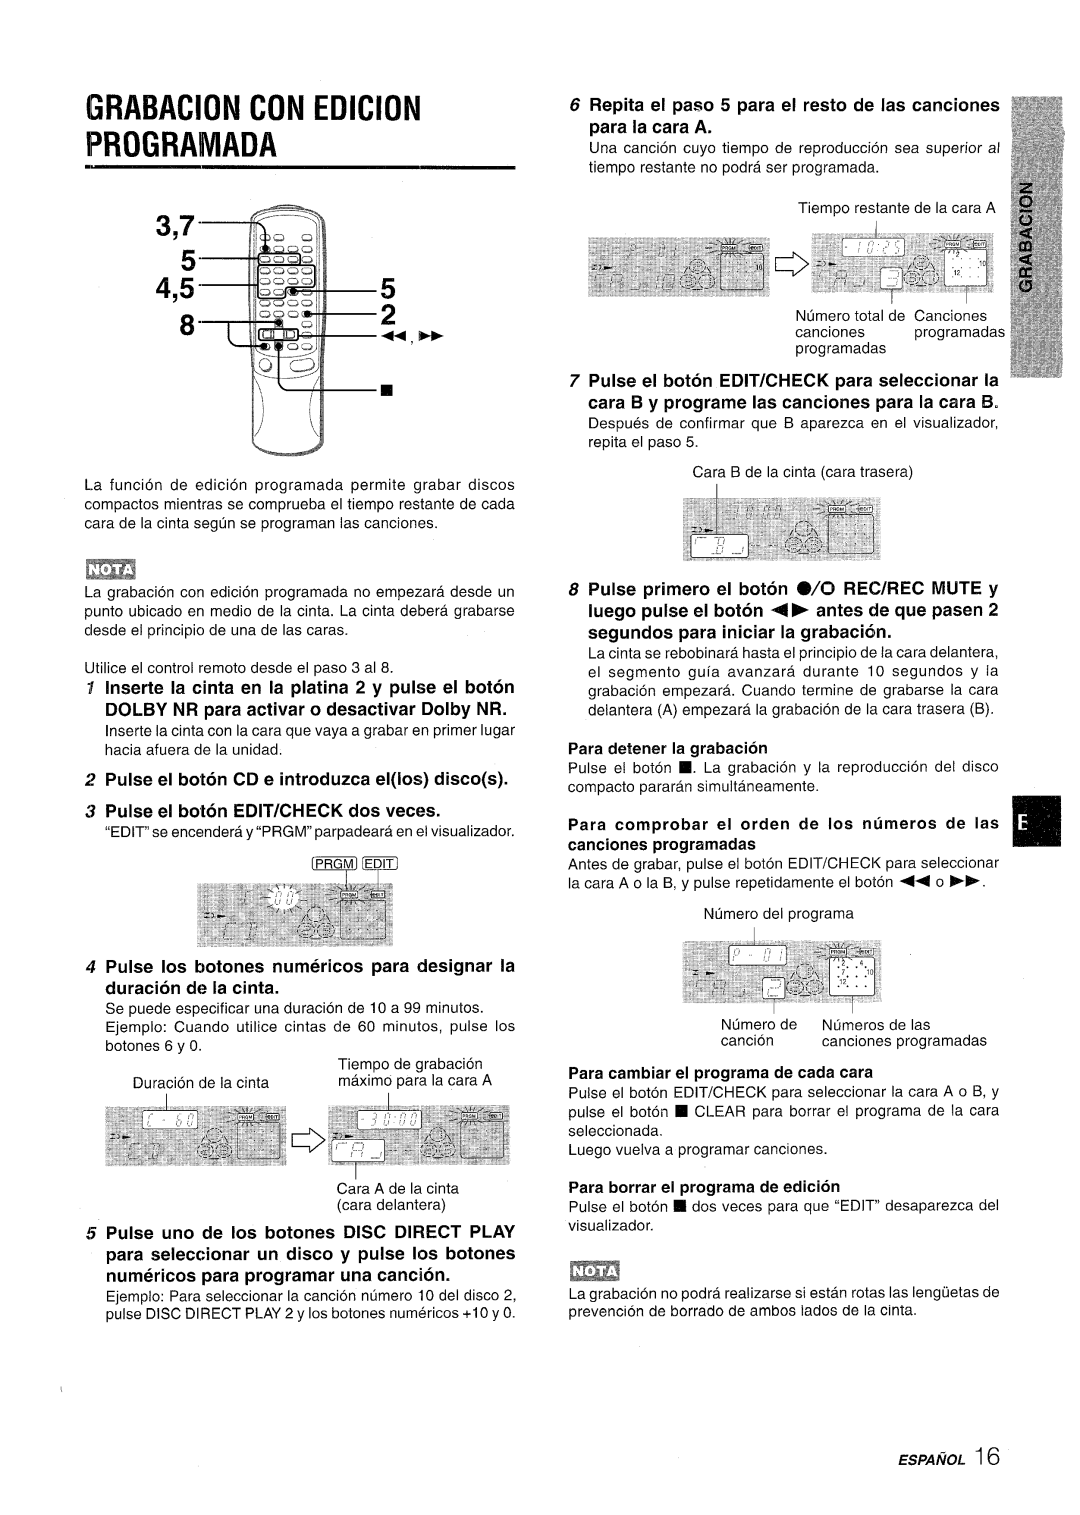 Aiwa NSX-AV800 manual GRABAC1ON CON EDICION I?ROGRA!MADA, 3,7 5“ 4,55, 8-++, Pulse el boton CD e introduzca ellos discos 